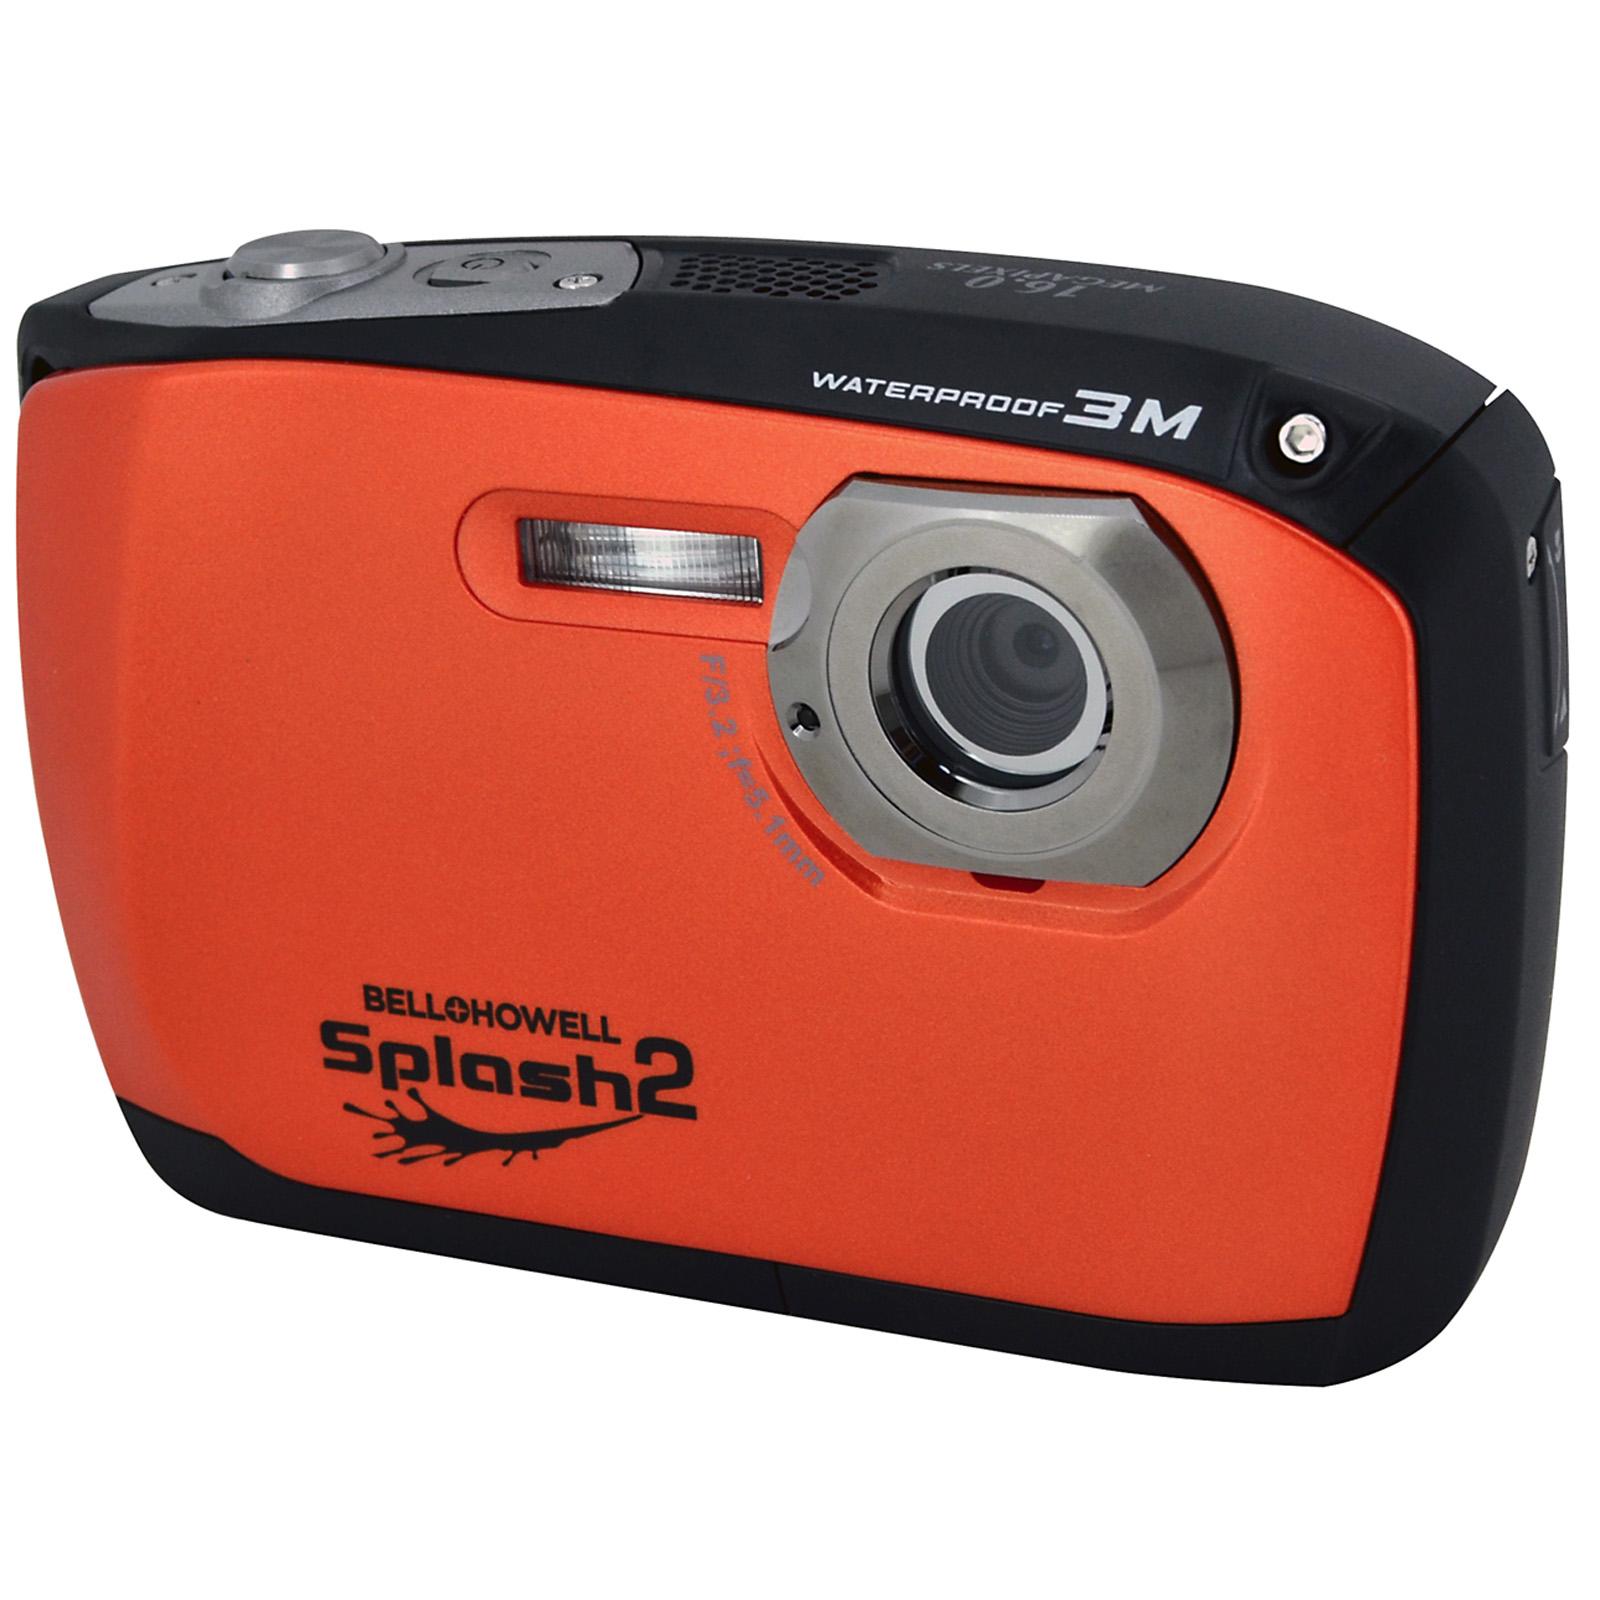 Bell+howell Splash2 16MP Waterproof Digital Camera w/HD Video (Orange)